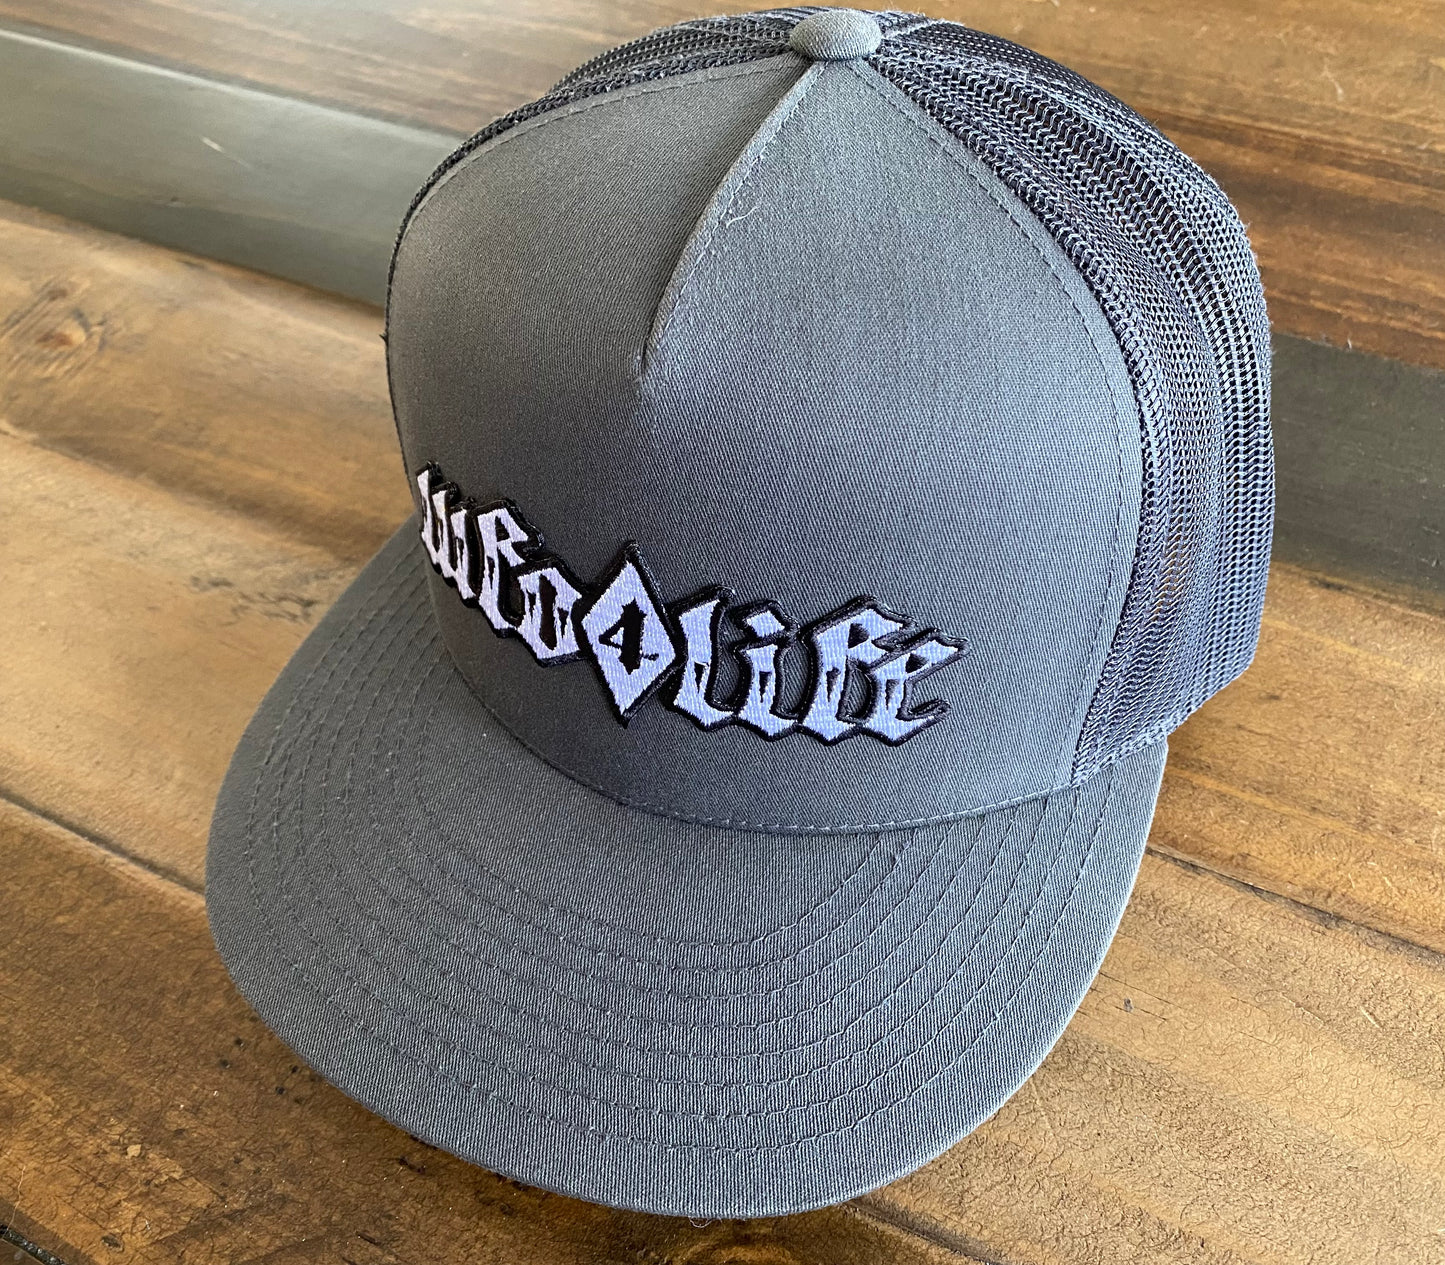 WFO 4 LIFE ™ - "% Diamond %" - Mesh Snapback Hat - Flat Bill - 6 Color Options